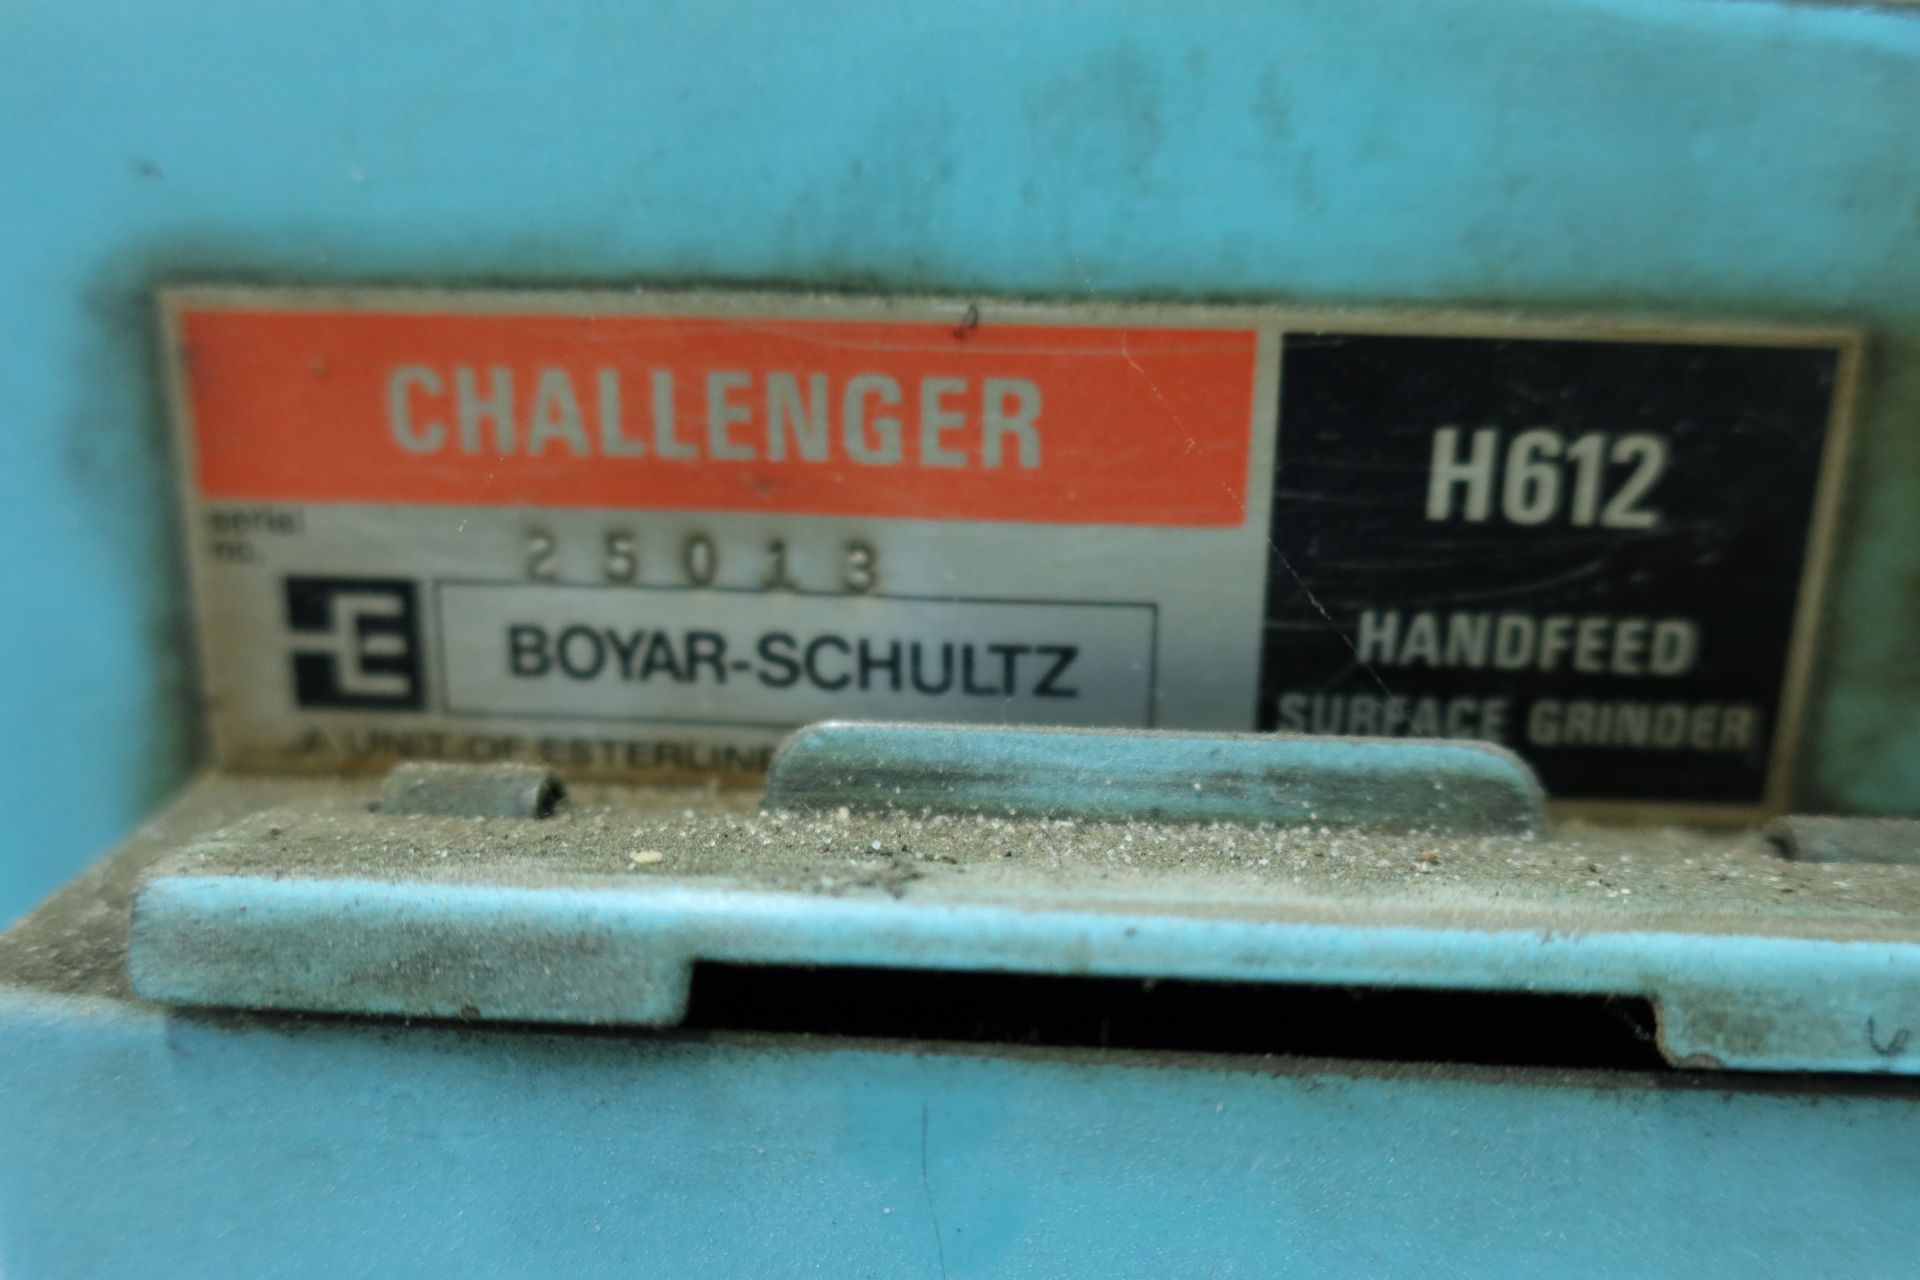 H612 Boyer Schultz Surface Grinder S/N 25013 - Image 2 of 3